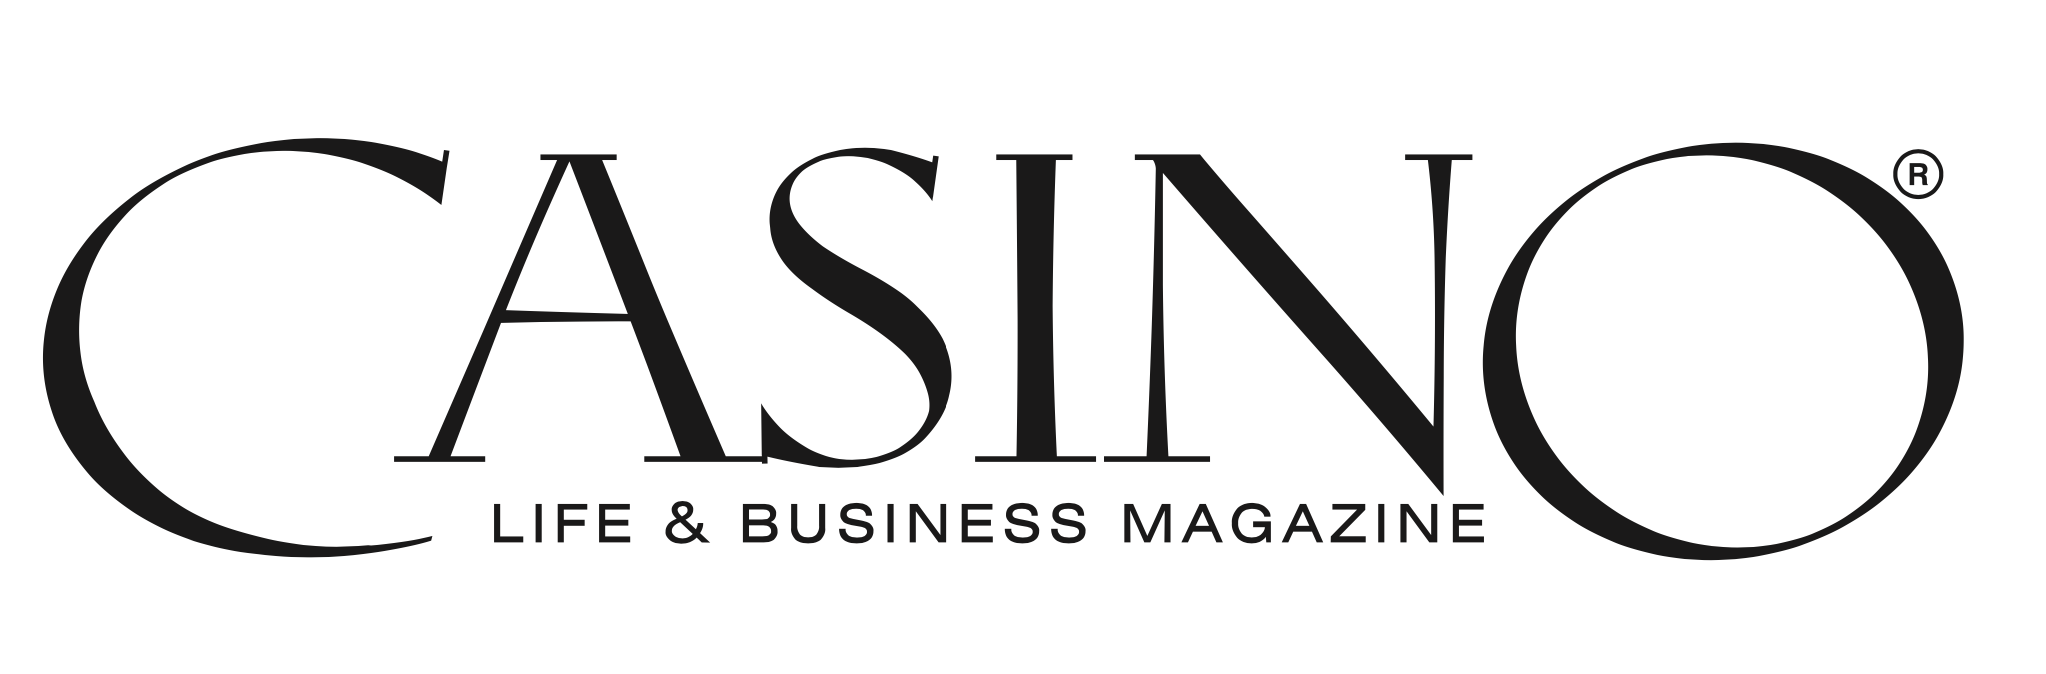 Casino Life & Business Magazine